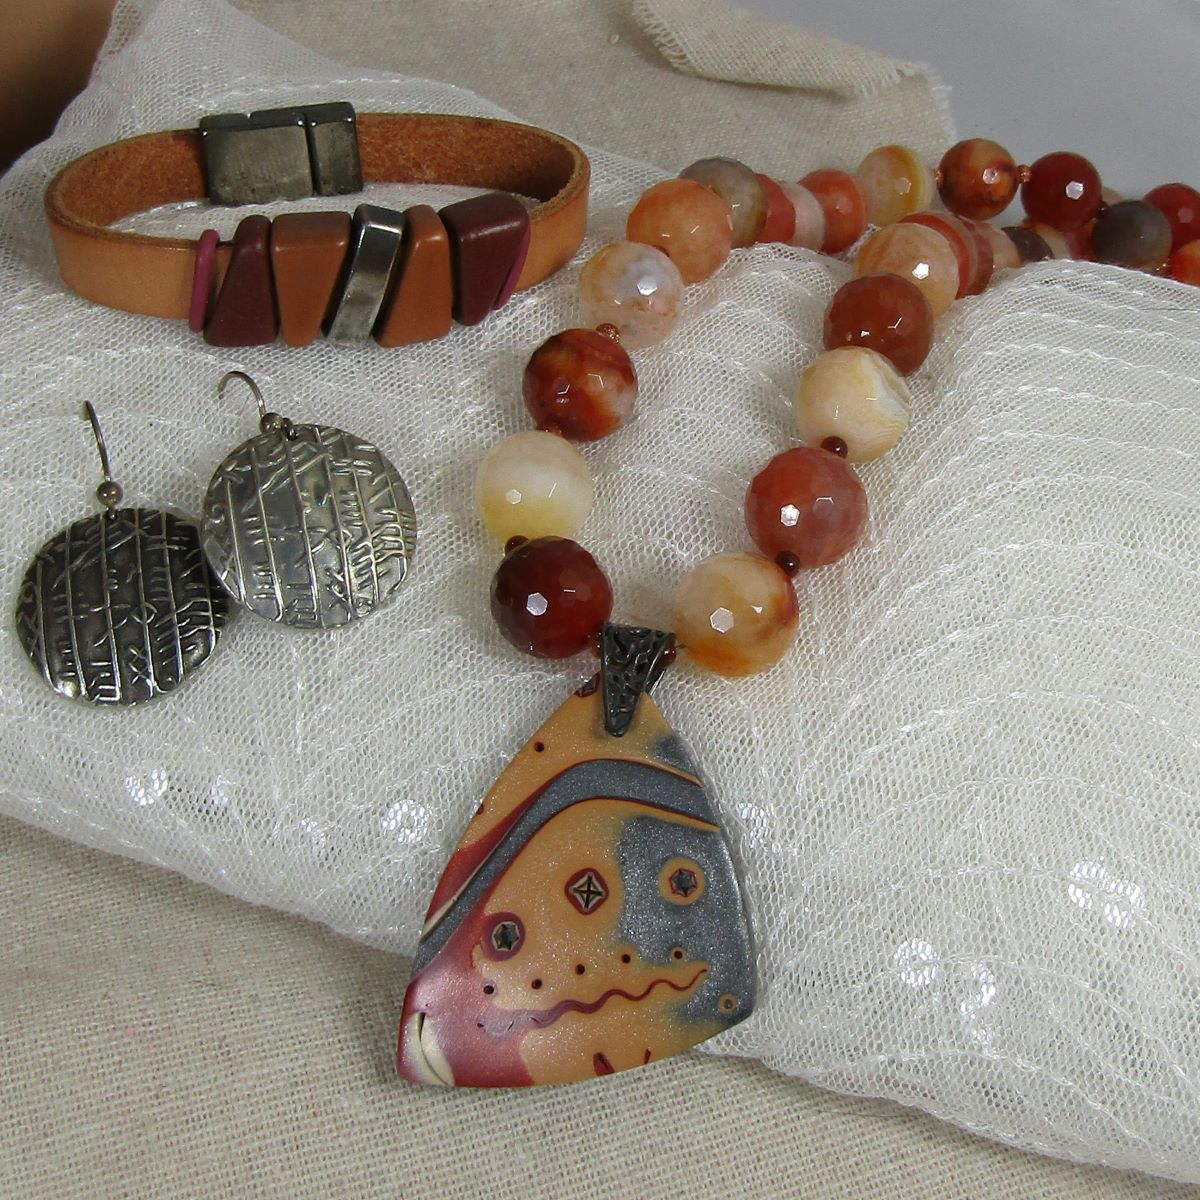 Majestic Stone Handmade Pendant Necklace Earrings & Leather Bracelet - VP's Jewelry 